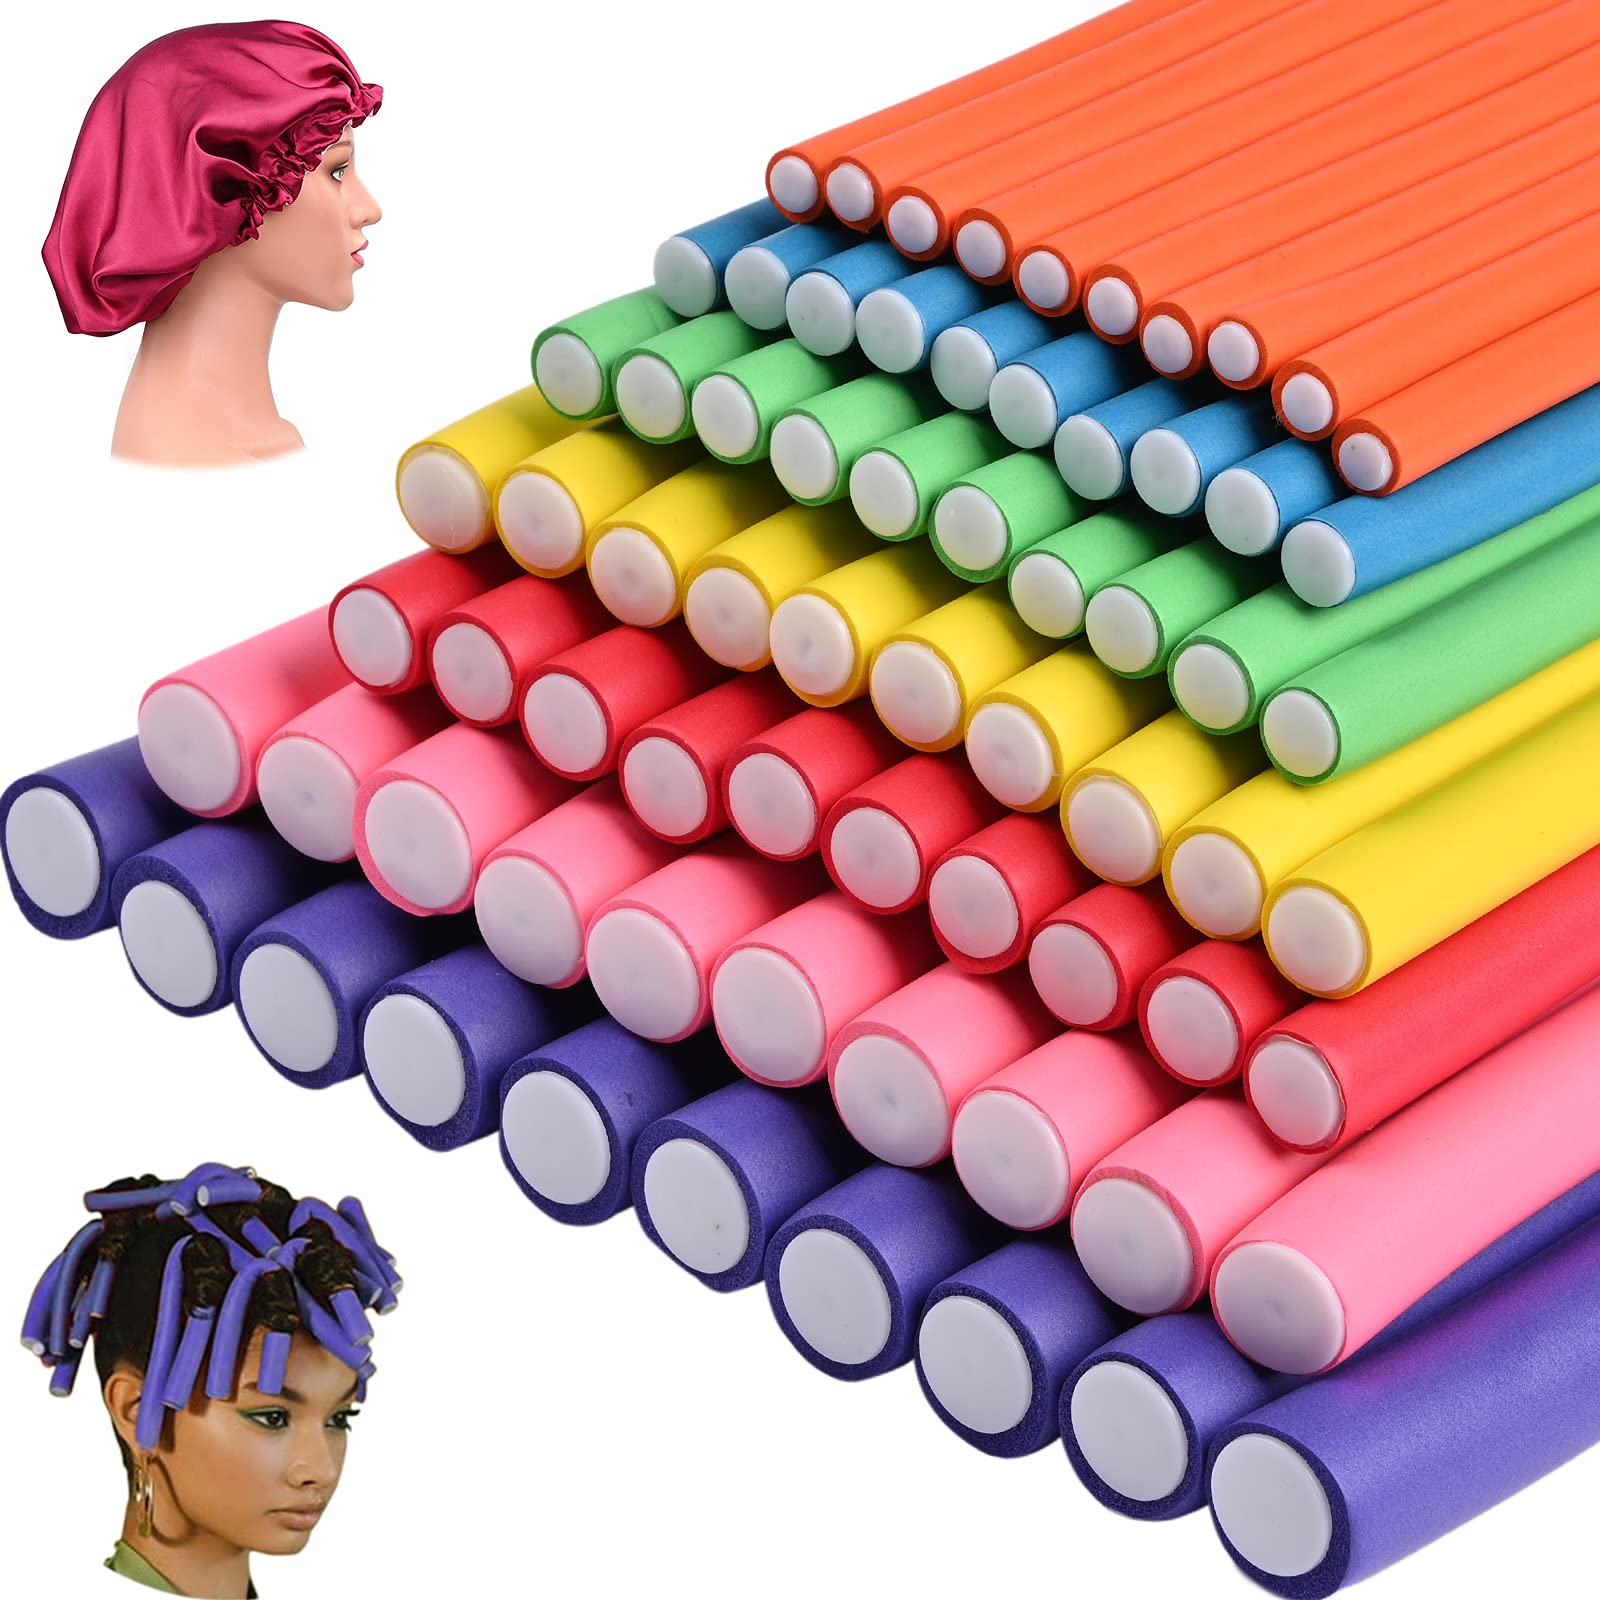 70 Pack  Inch Flex-rods Hair Rollers+Silk Sleep Bonnet Cap, Twist-flex  Foam Hair Roller Curling Rods-Hair Curlers Rollers for Short, Medium, Long  thick Hair(7 Size Random Color) Colorful